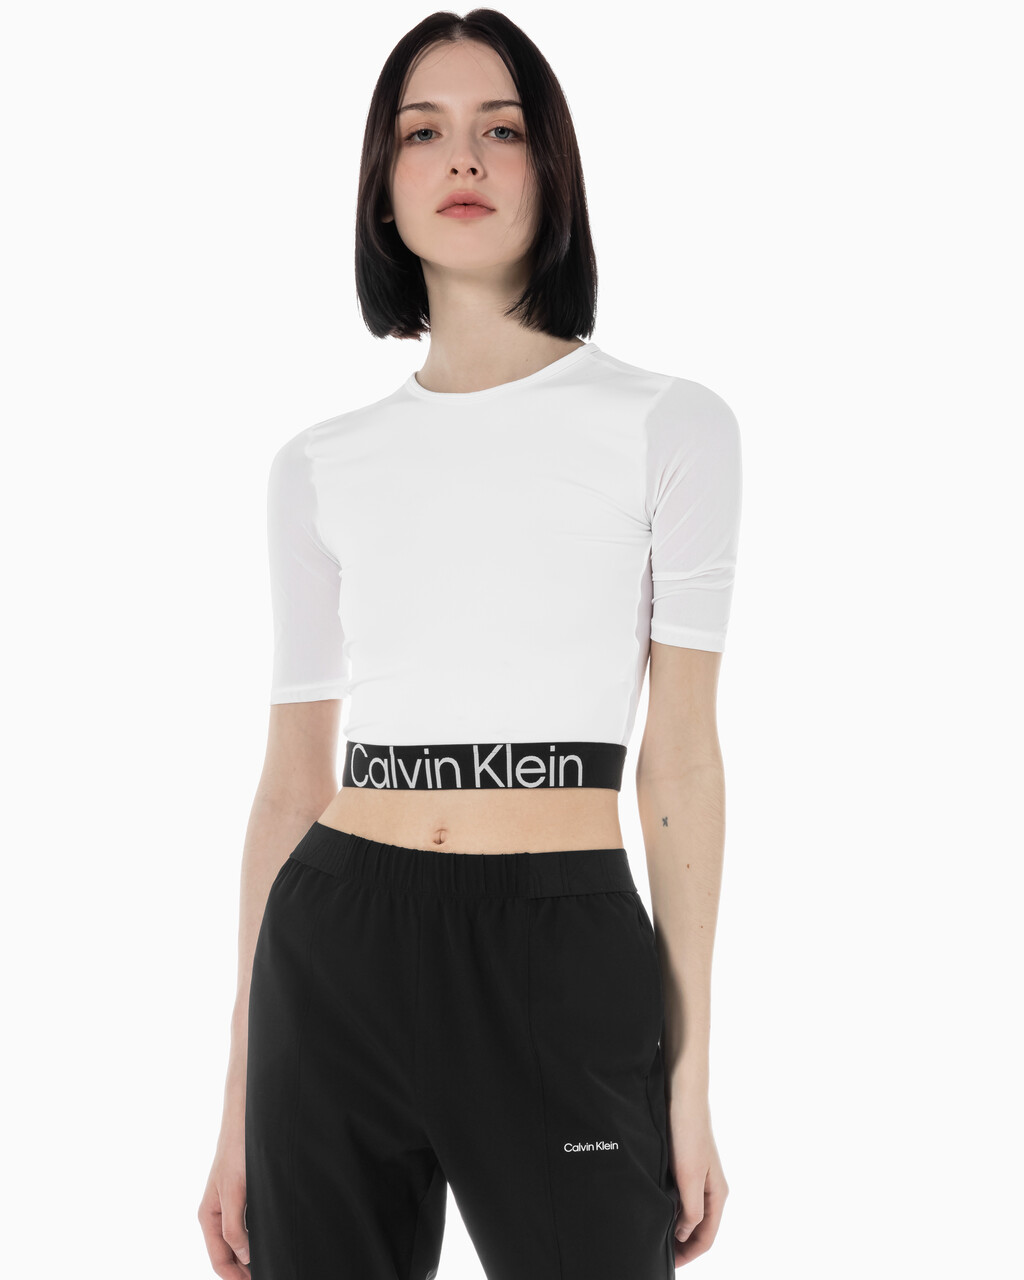 Buy 여성 레귤러 핏 스트레치 기능성 크롭 반팔 티셔츠 in color BRIGHT WHITE